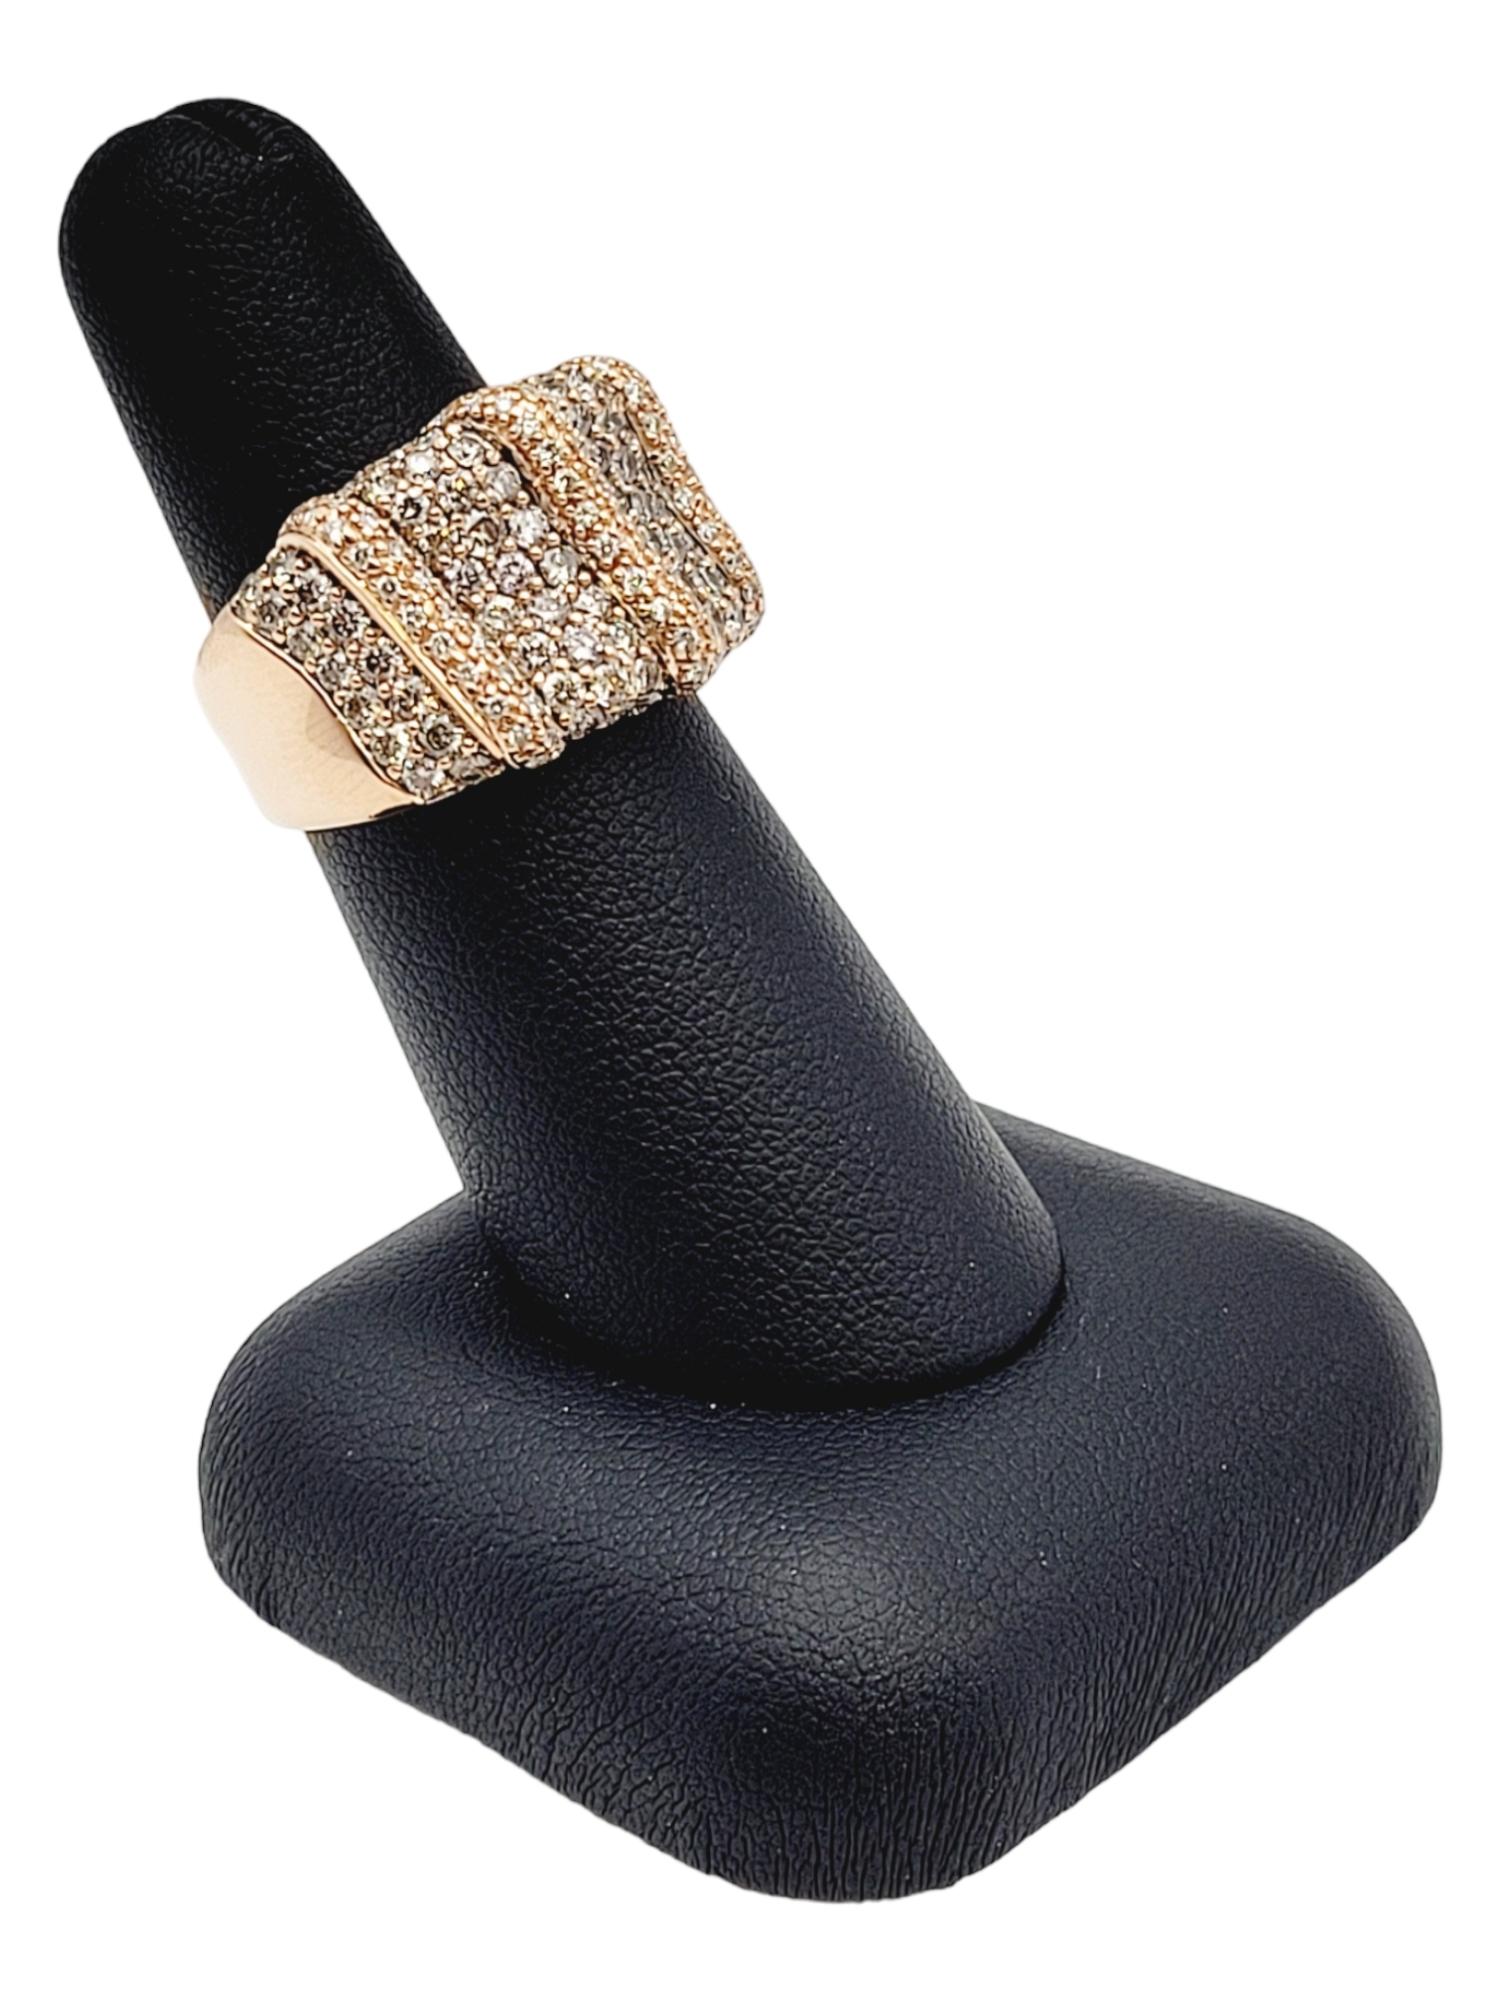 2.14 Carat Light Brown Diamond Pave Band Ring in Polished 14 Karat Rose Gold For Sale 6